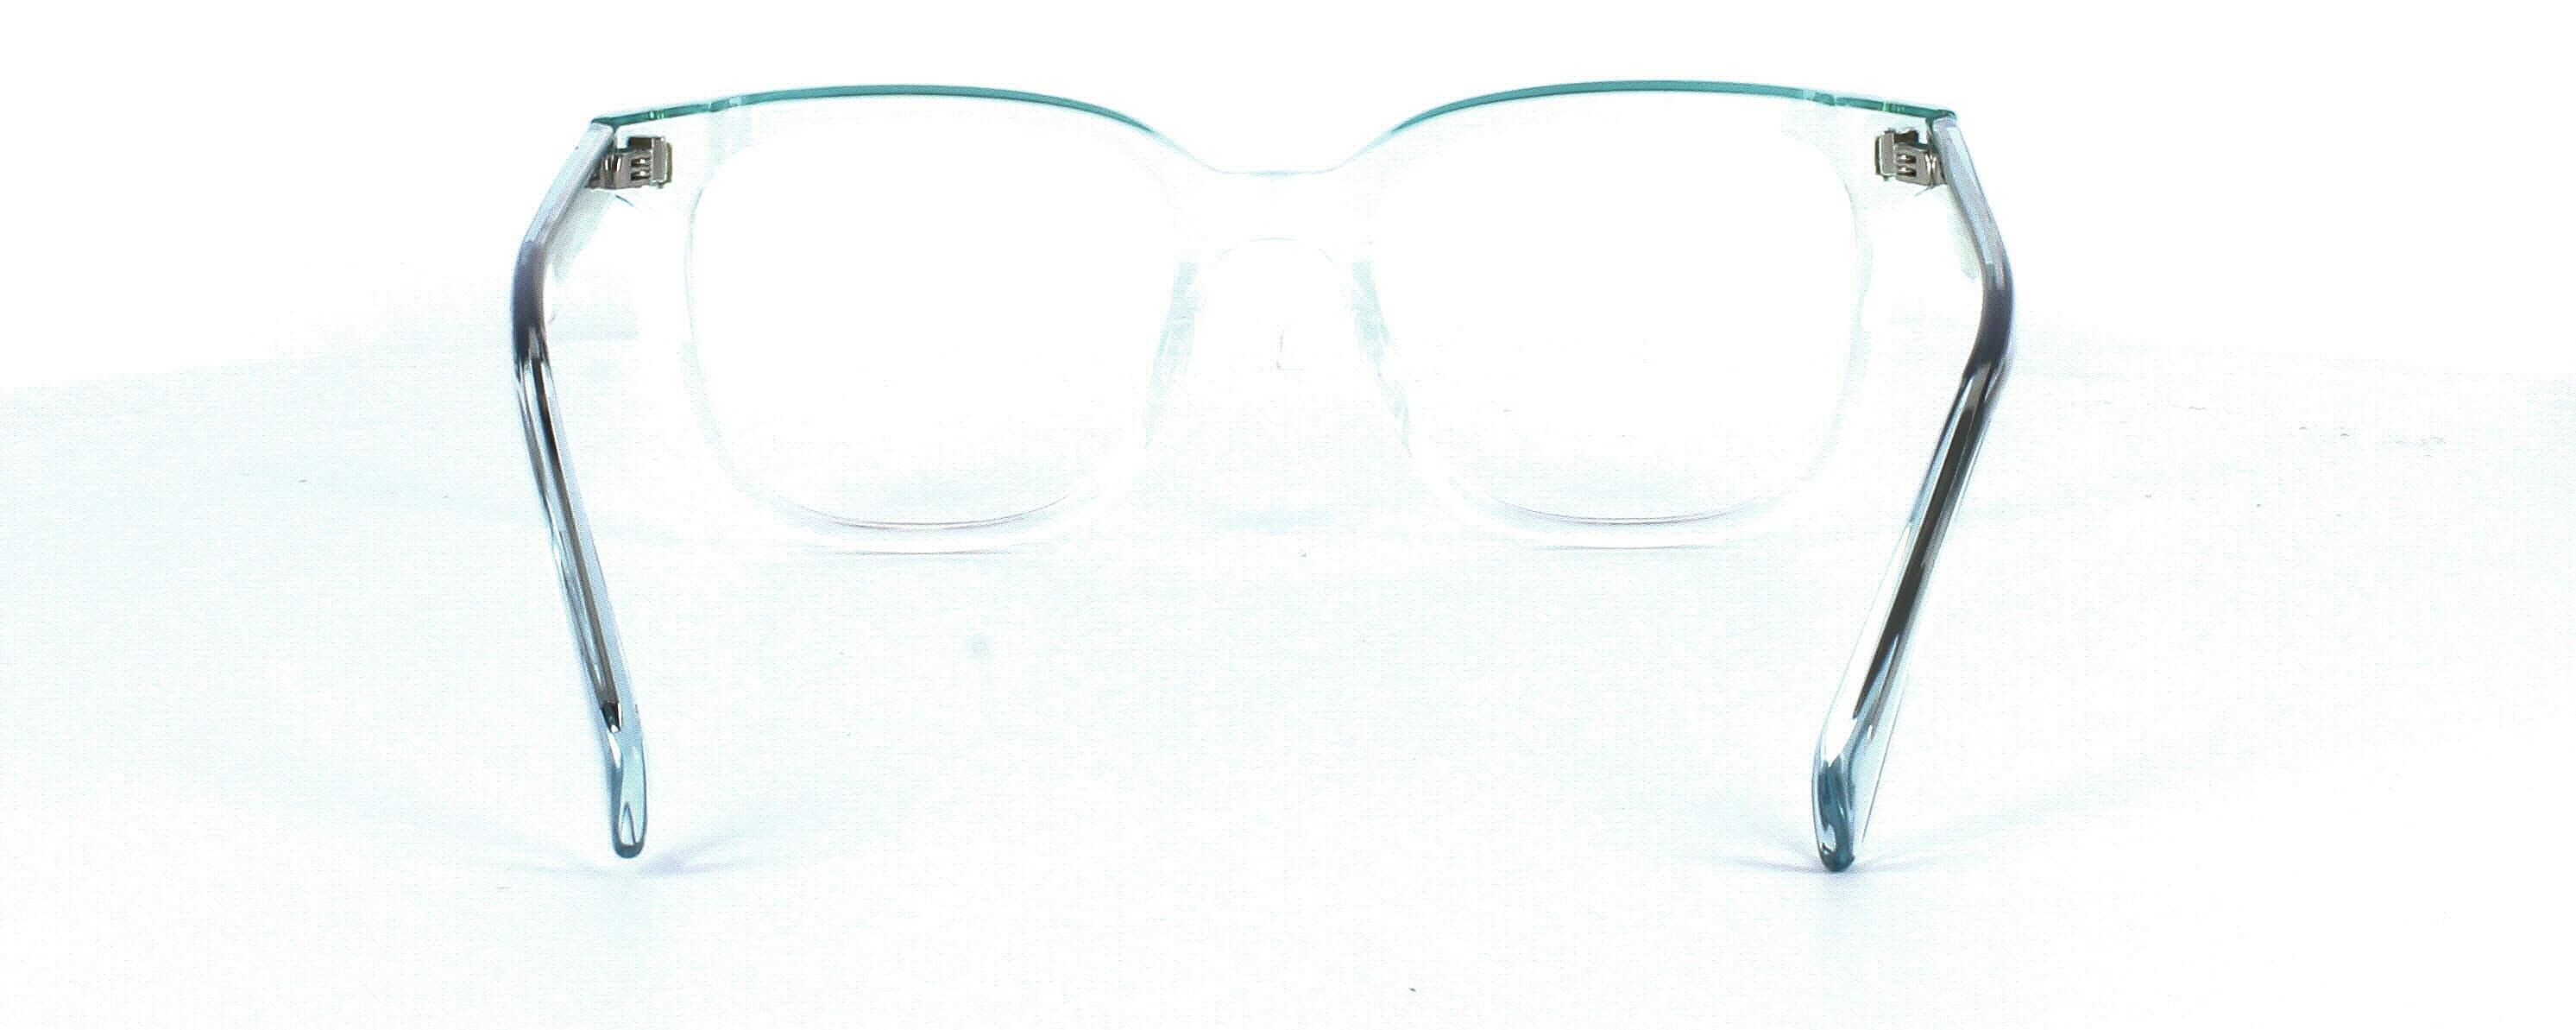 Edward Scotts TRBC901 - Lt crystal blue - Unisex acetate retro style glasses frame with square shaped lenses - image view 4